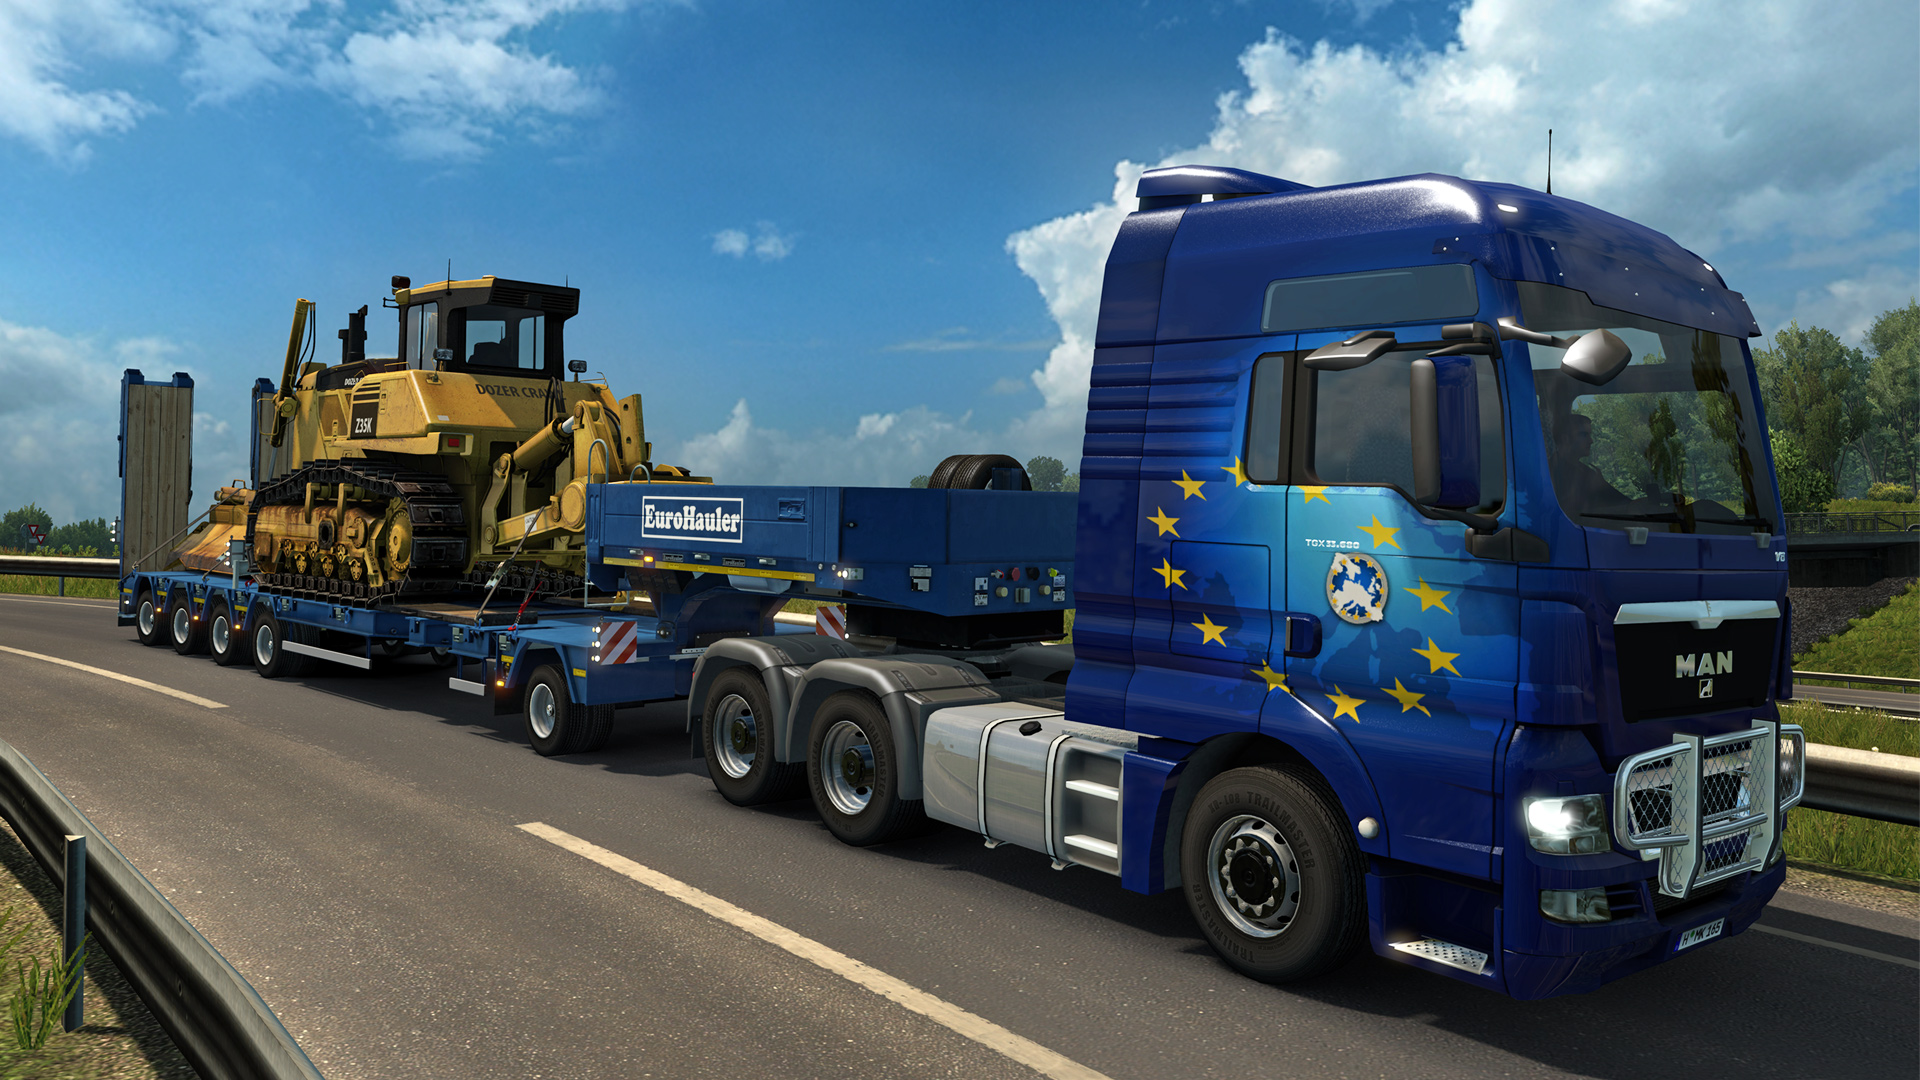 euro truck simulator 2 maps mod